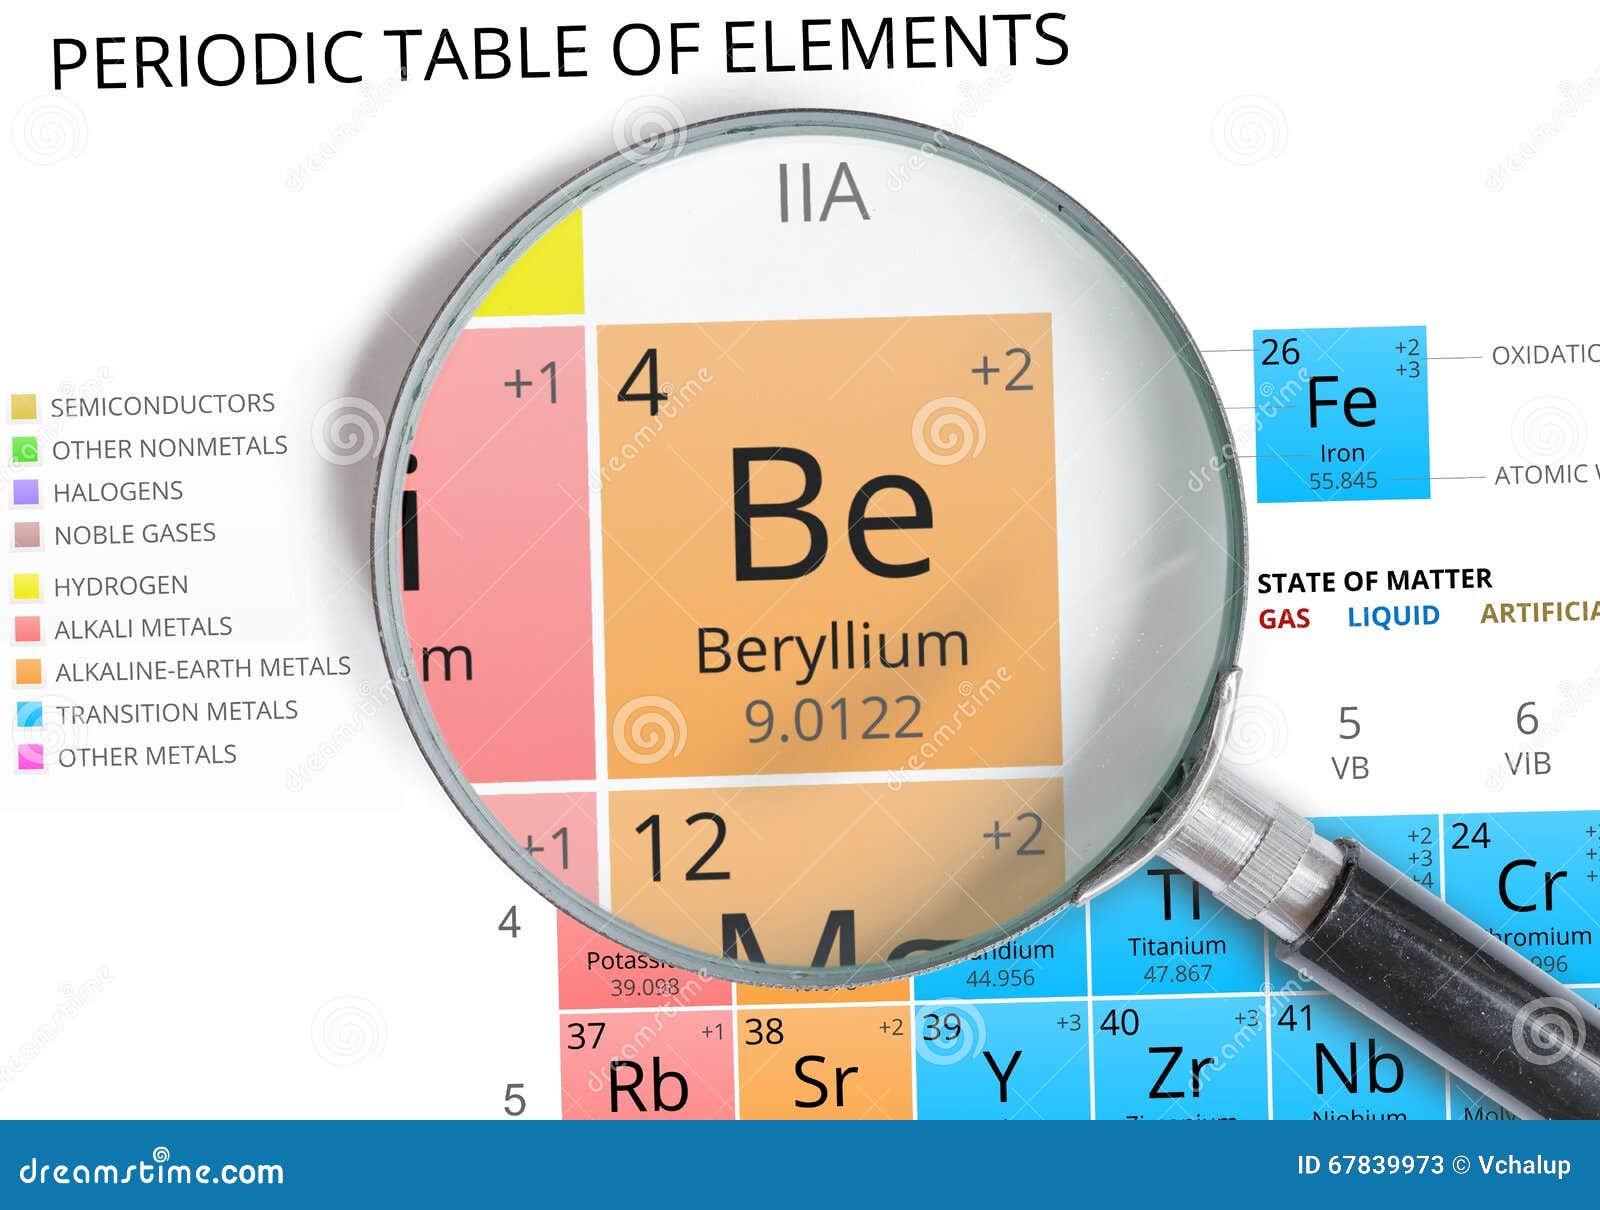 Be элемент металл. Be химический элемент. Бериллий химический элемент. Бериллий элемент таблицы Менделеева. Бериллий химический элемент в таблице Менделеева.